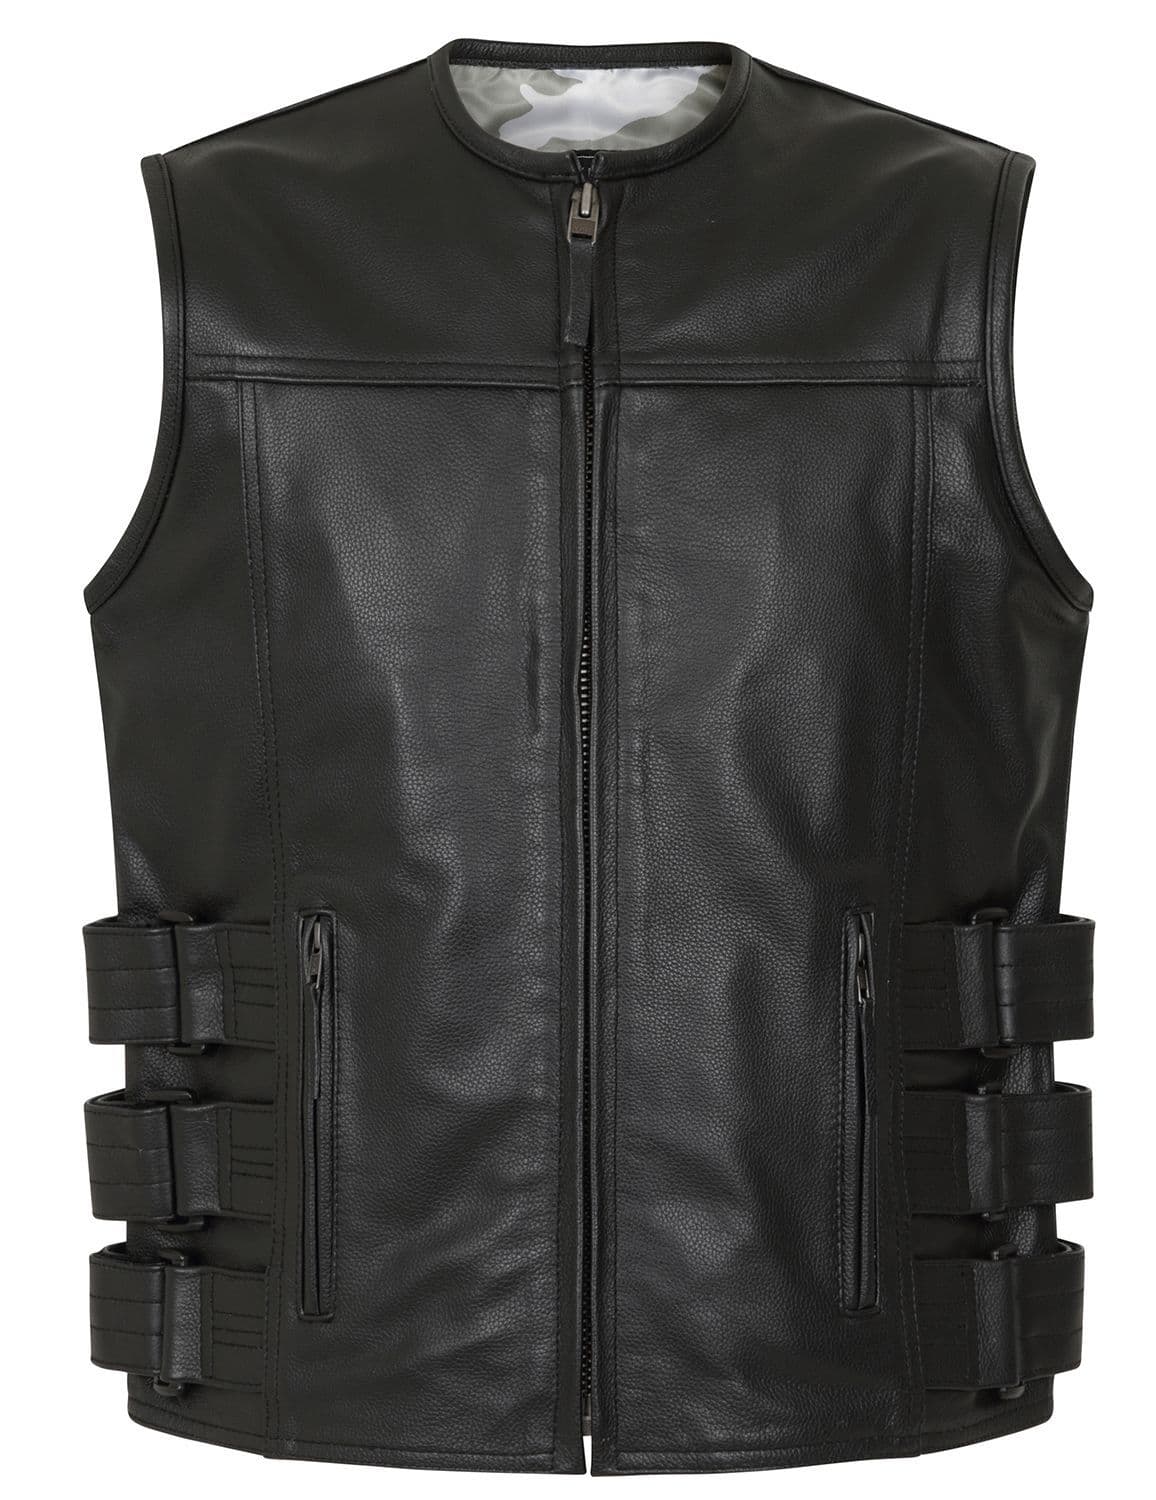 Enforcer Leather Tactical Style Biker Vest by Skintan Leather